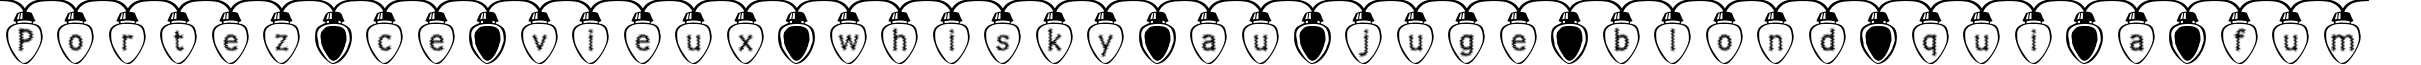 Пример написания шрифтом Fuzzy Xmas Lights текста на французском